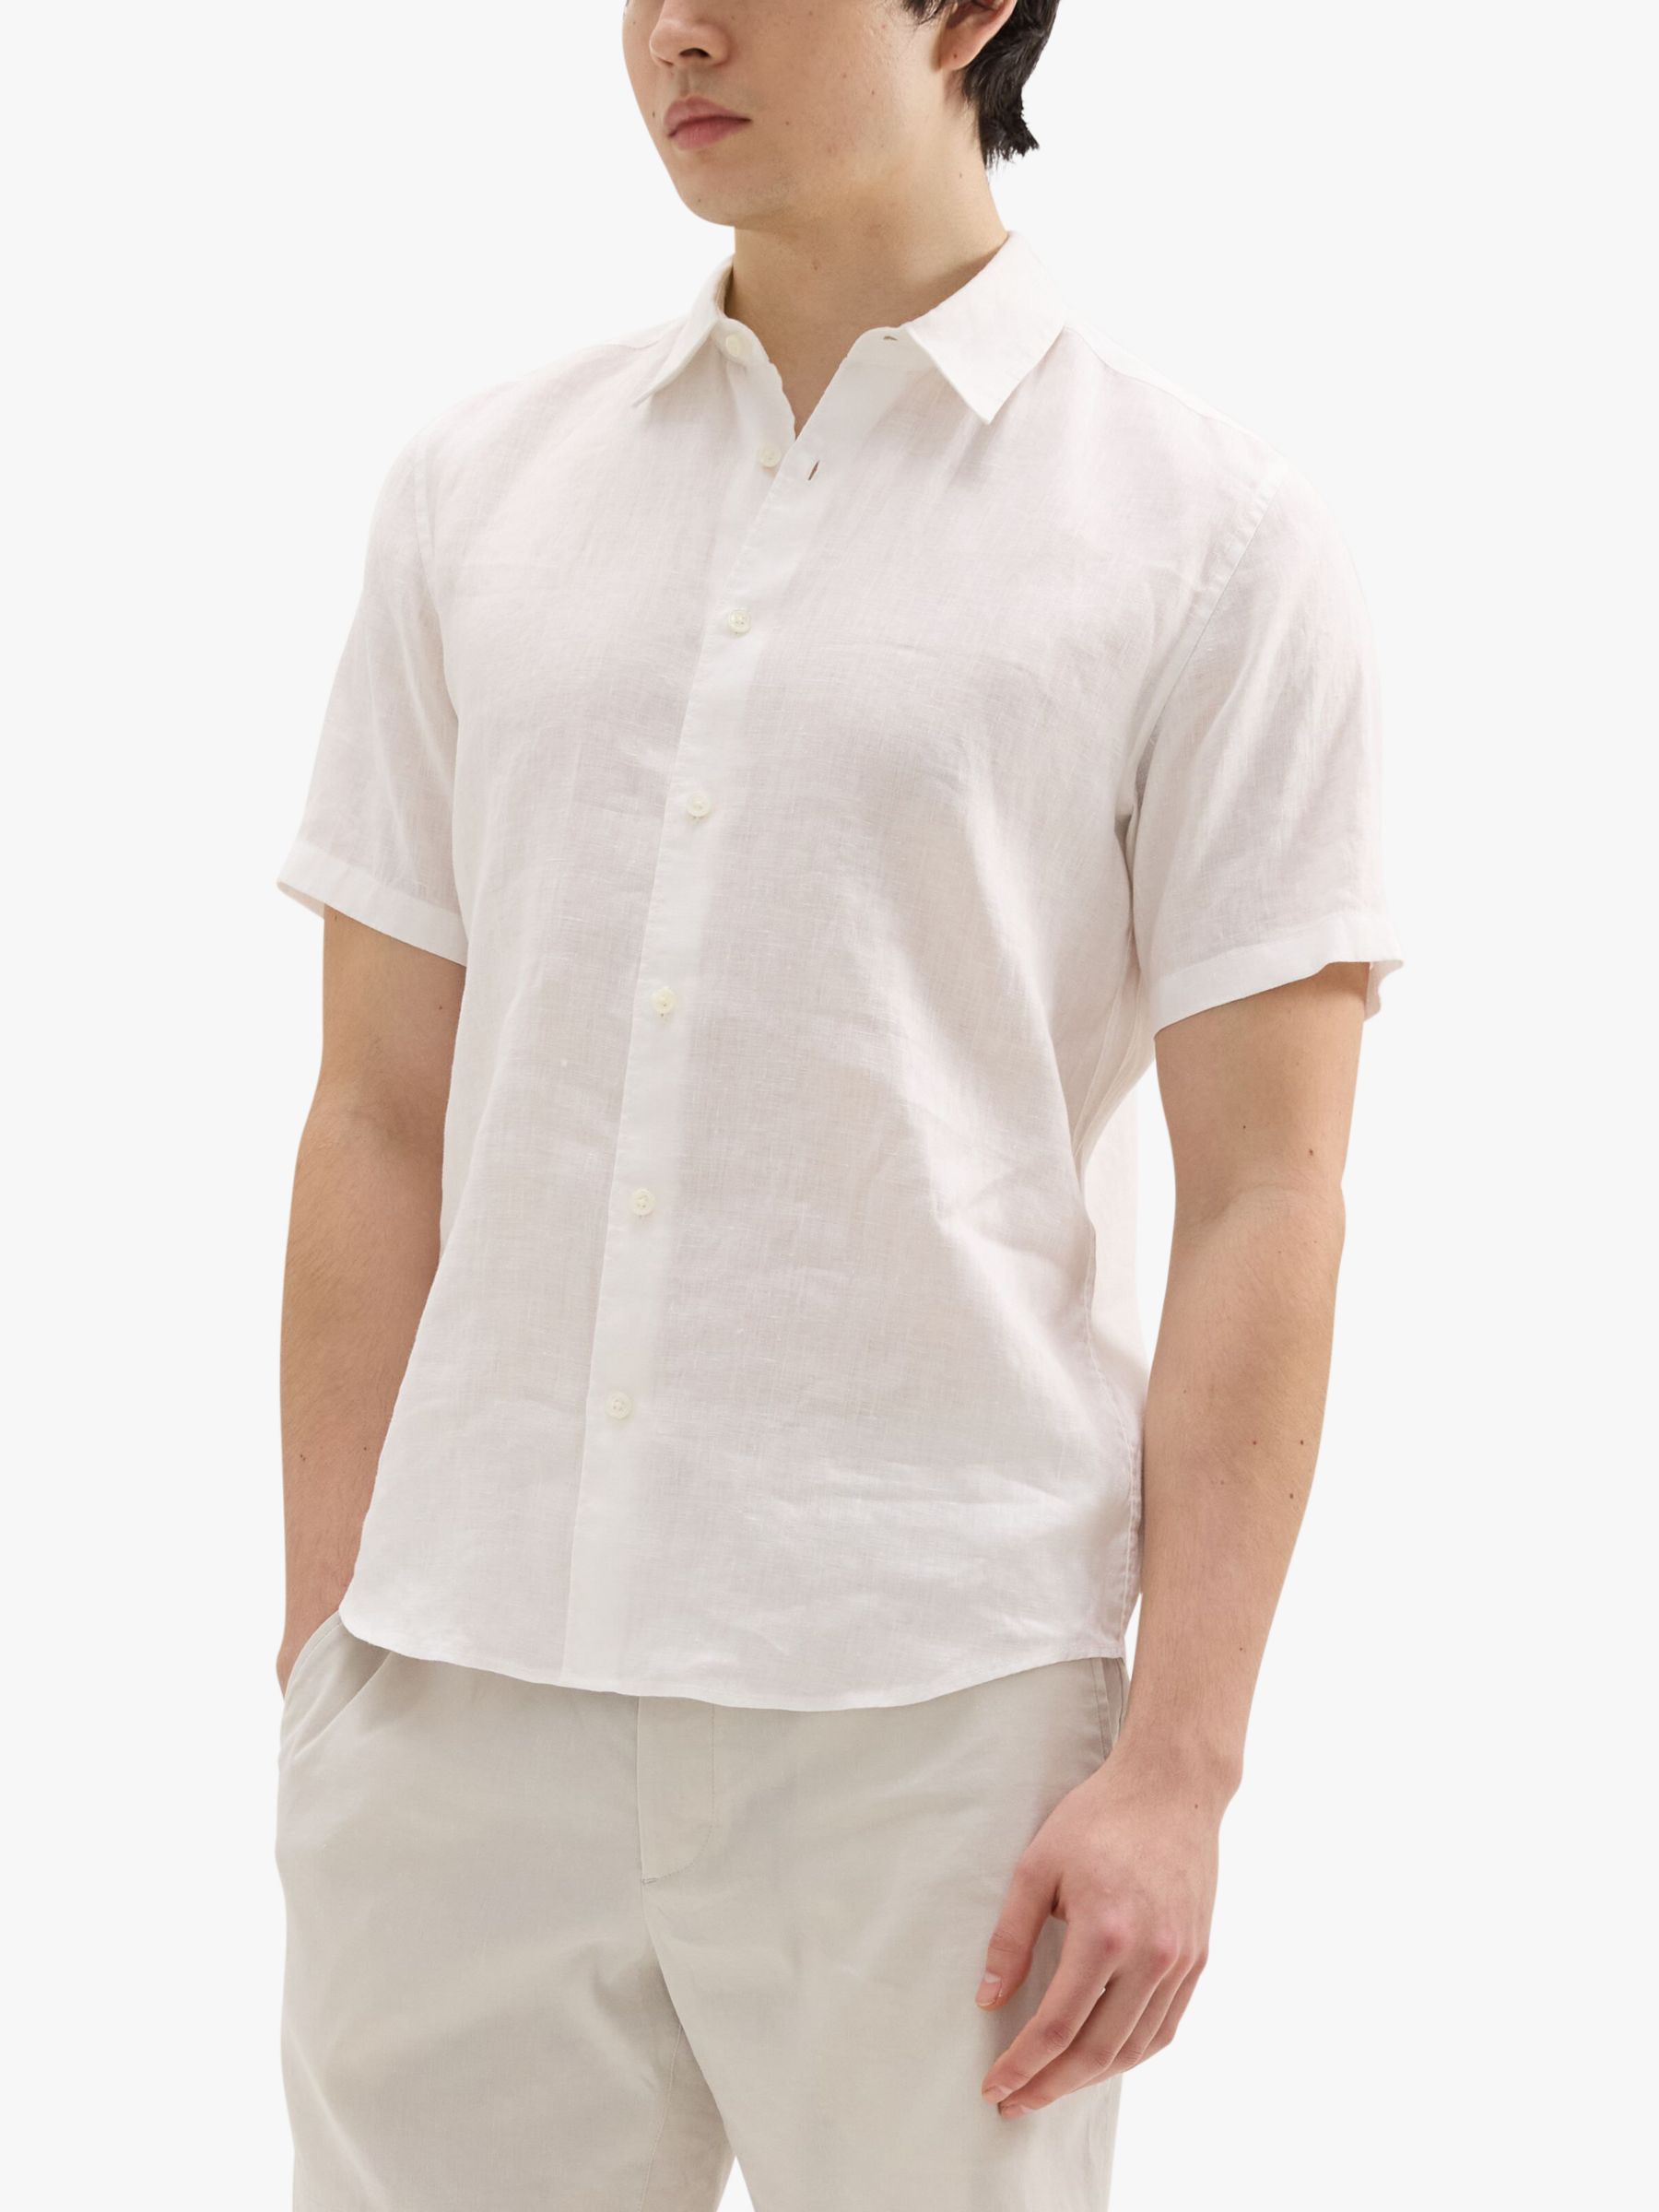 Theory Linen Shirt, White, S